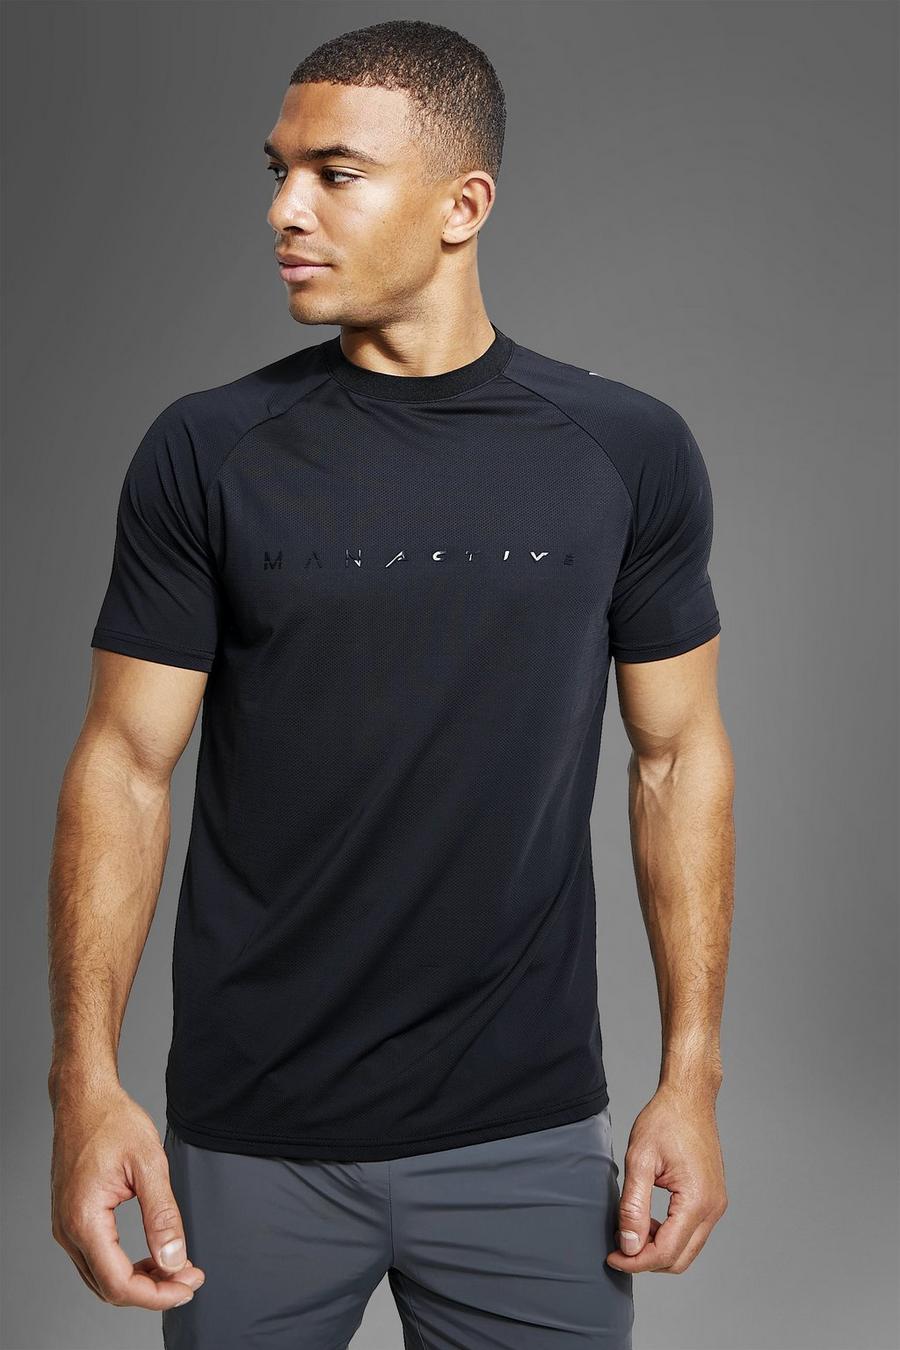 T-shirt Man Active Gym Tech per alta performance, Black nero